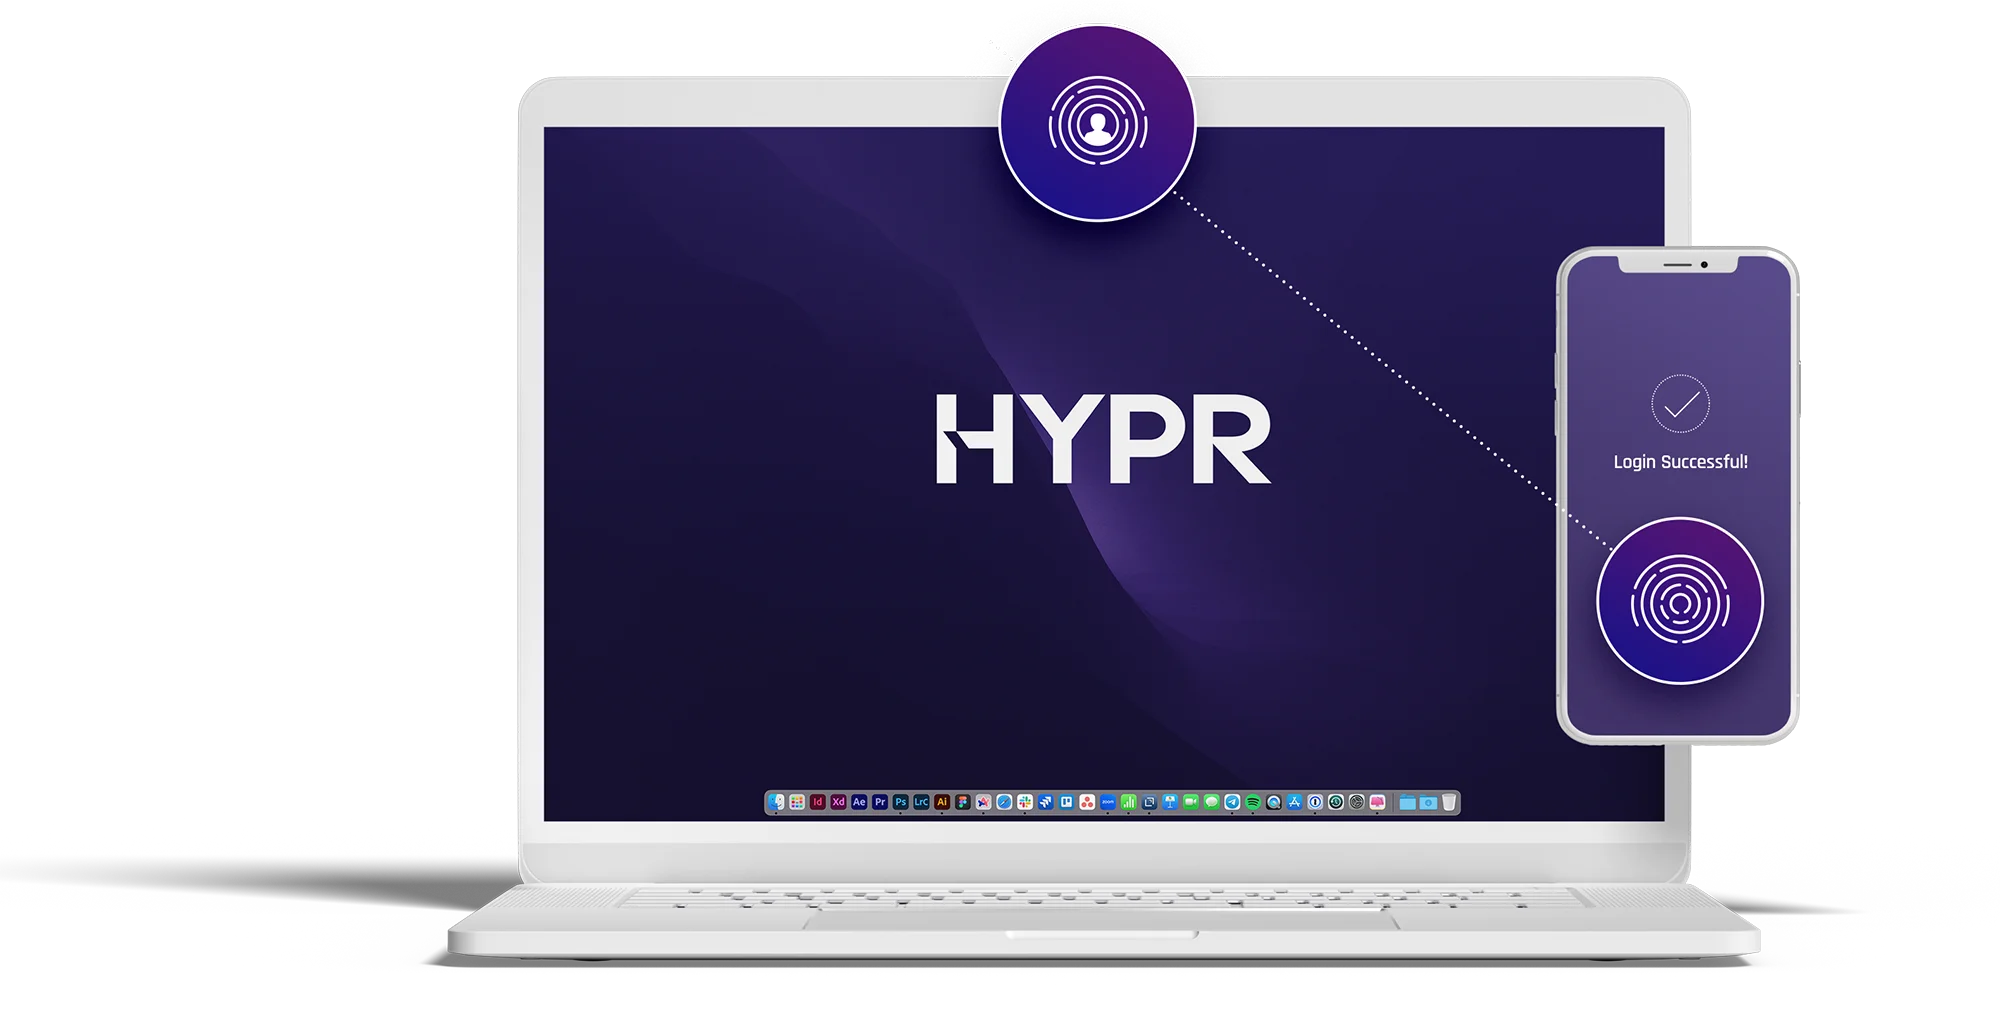 HYPR passwordless desktop mfa